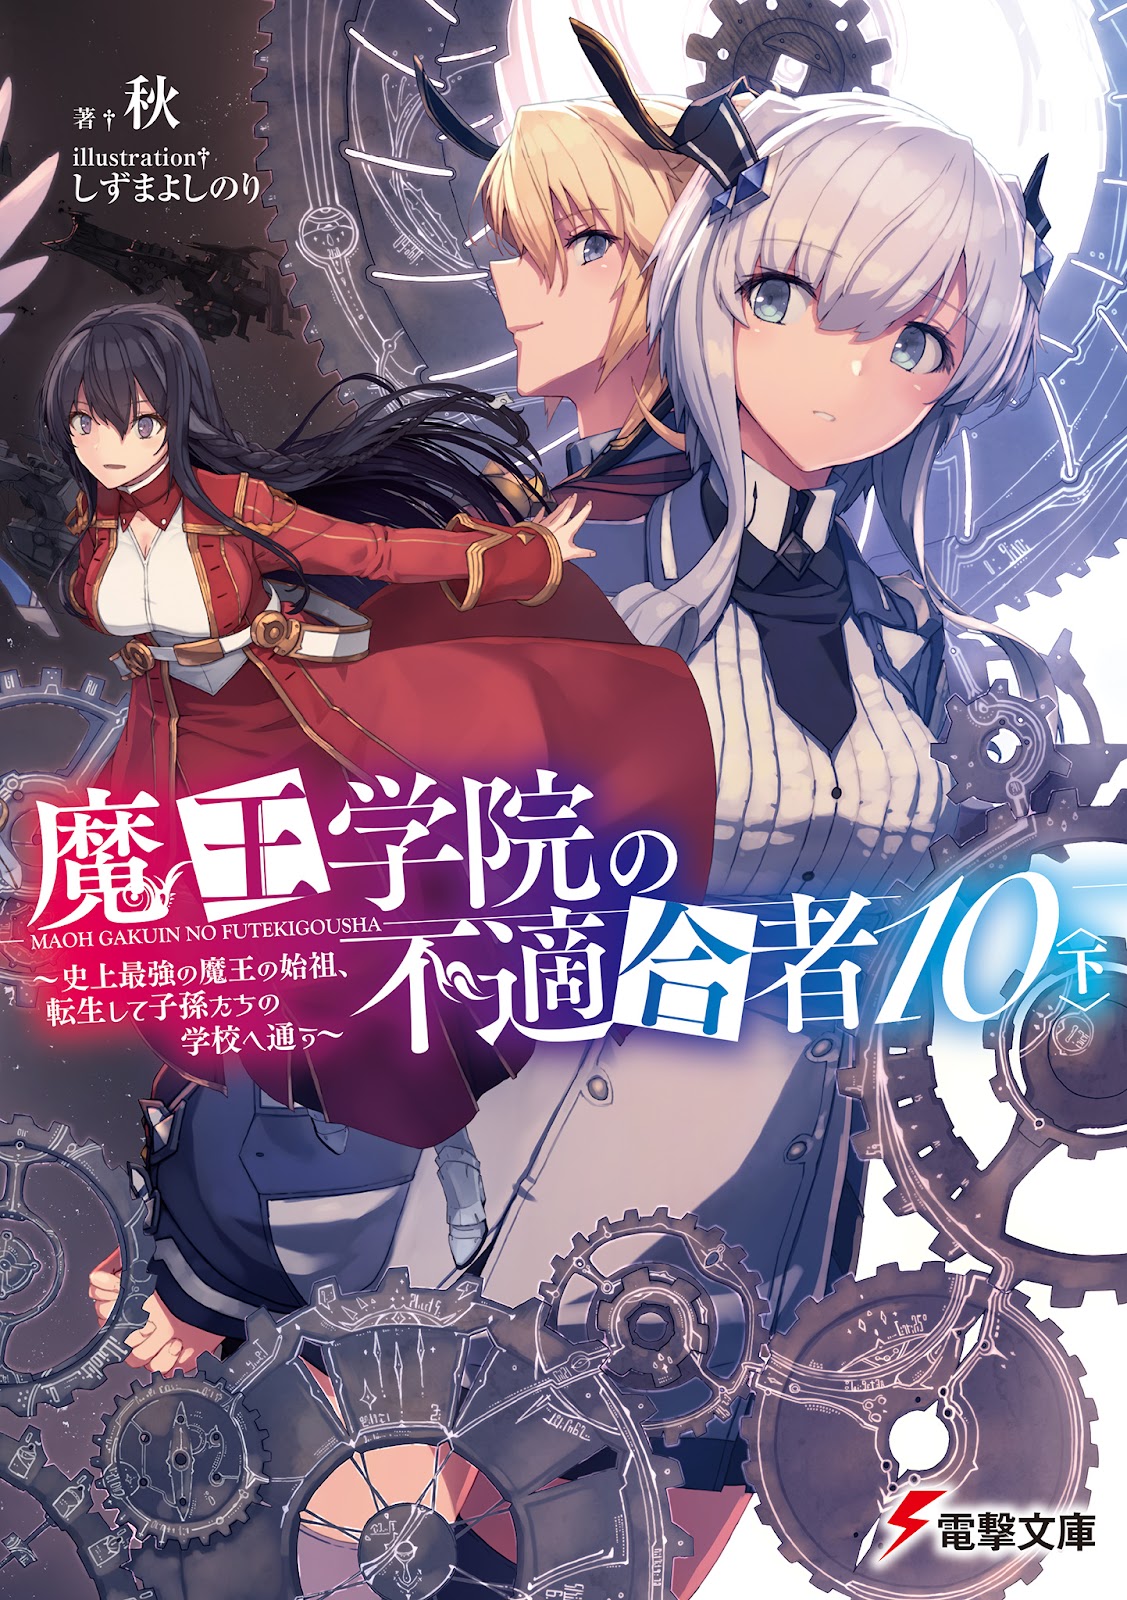 ruidrive.com - Ilustrasi Light Novel Maou Gakuin no Futekigousha - Volume 10 (Part 02)